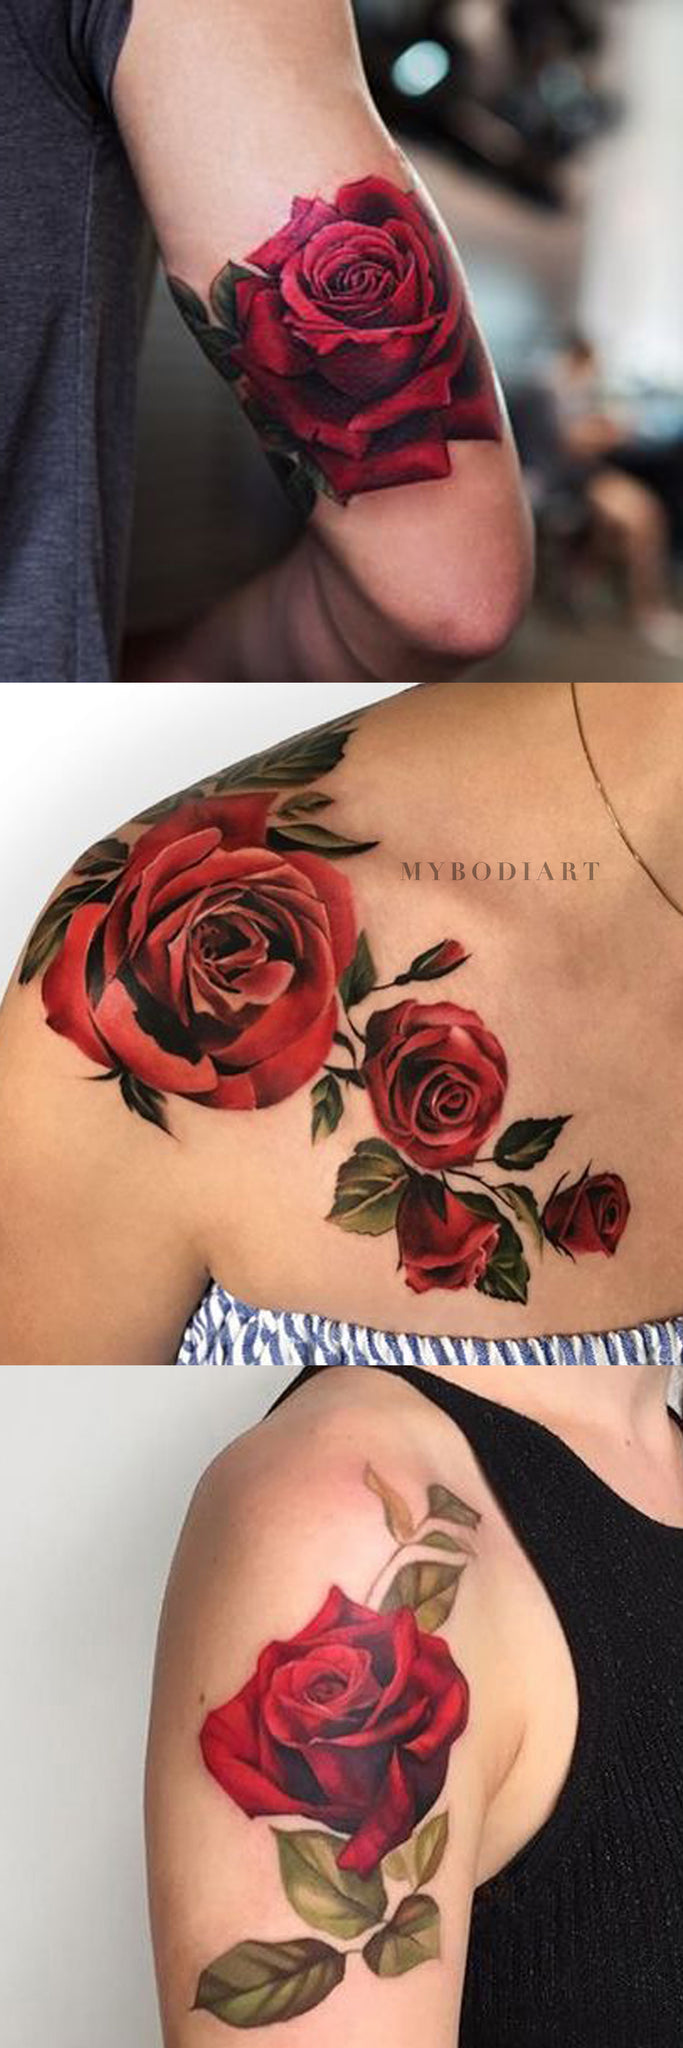 Watercolor Red Rose Tattoo Ideas for Women Cute Floral Flower Shoulder Forearm Arm Sleeve Tattoos -  ideas del tatuaje floral de la rosa del rojo de la acuarela para las mujeres - www.MyBodiArt.com 